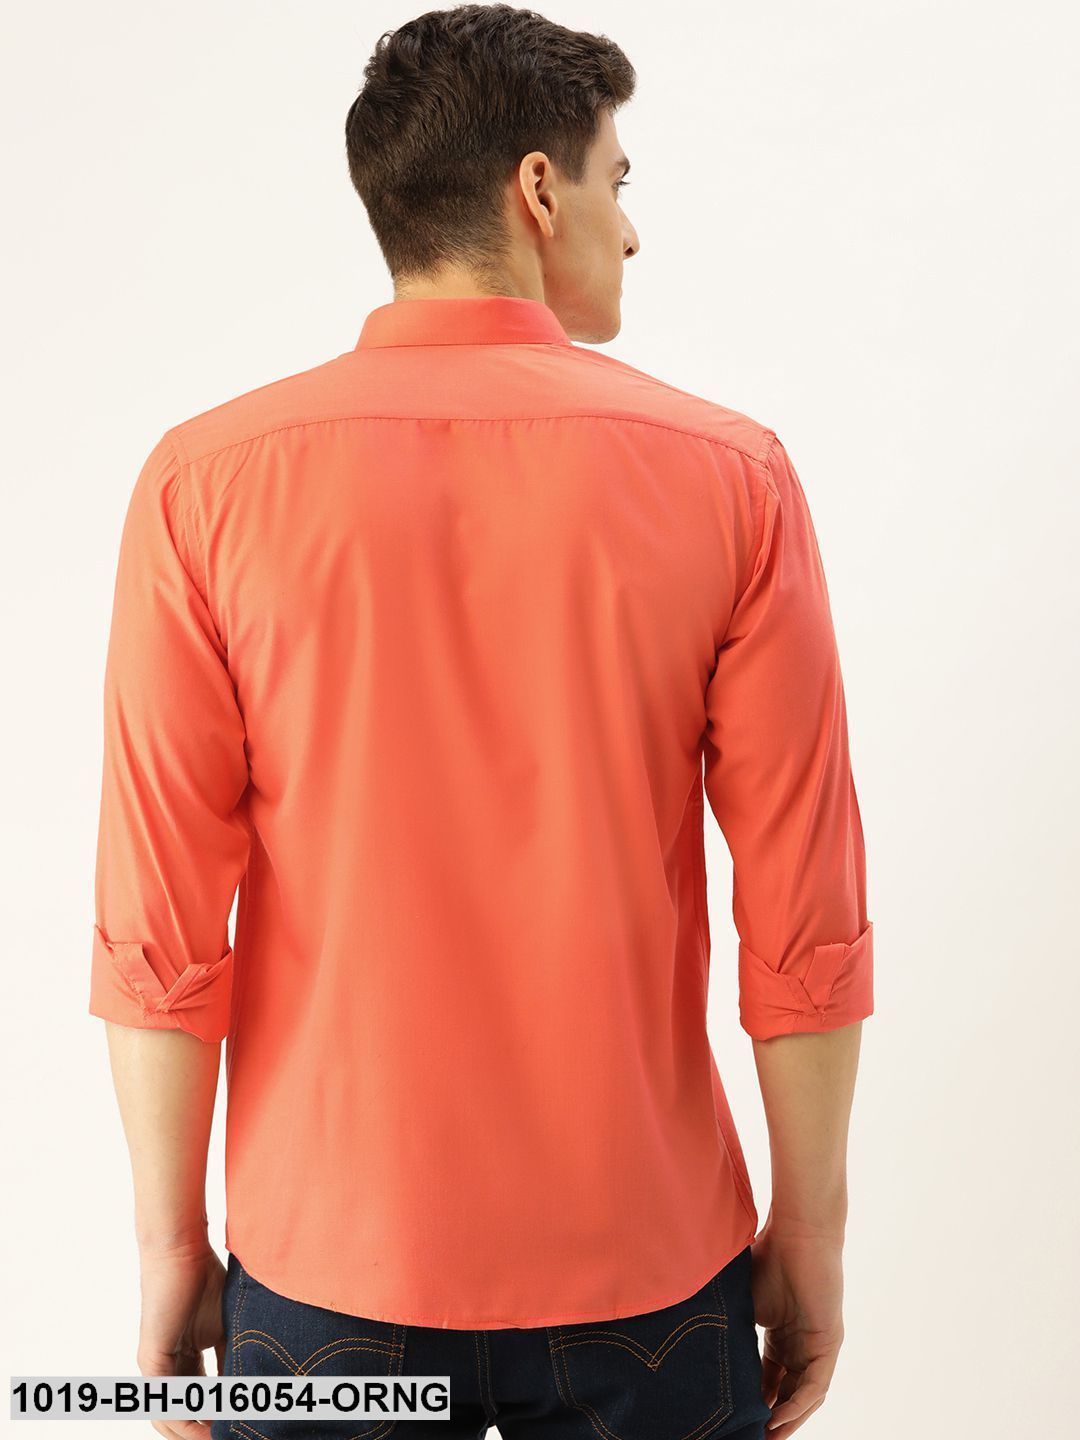 Men's Cotton Orange Casual Shirt - Sojanya